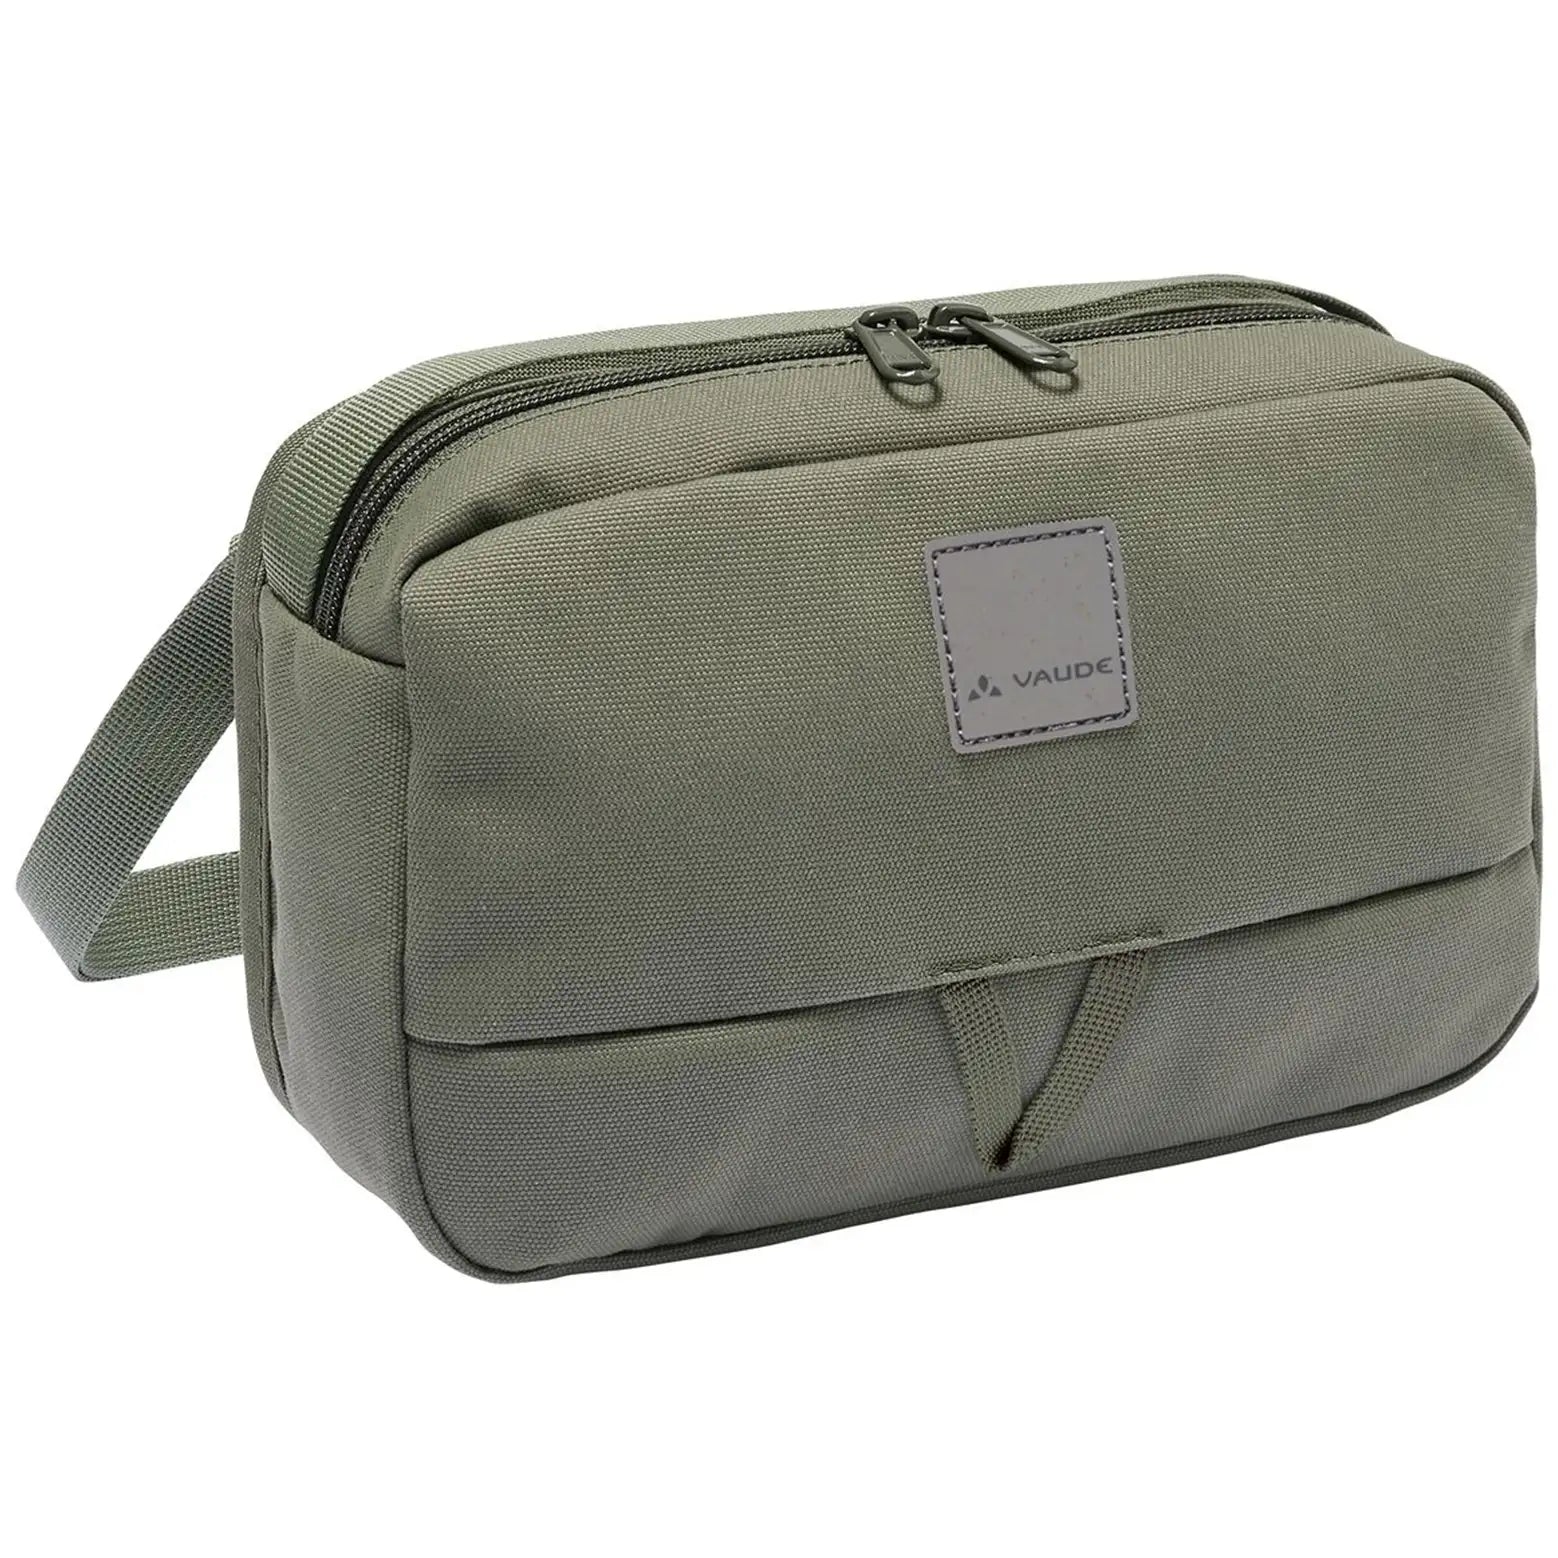 Vaude Coreway Minibag 3 24 cm - Khaki